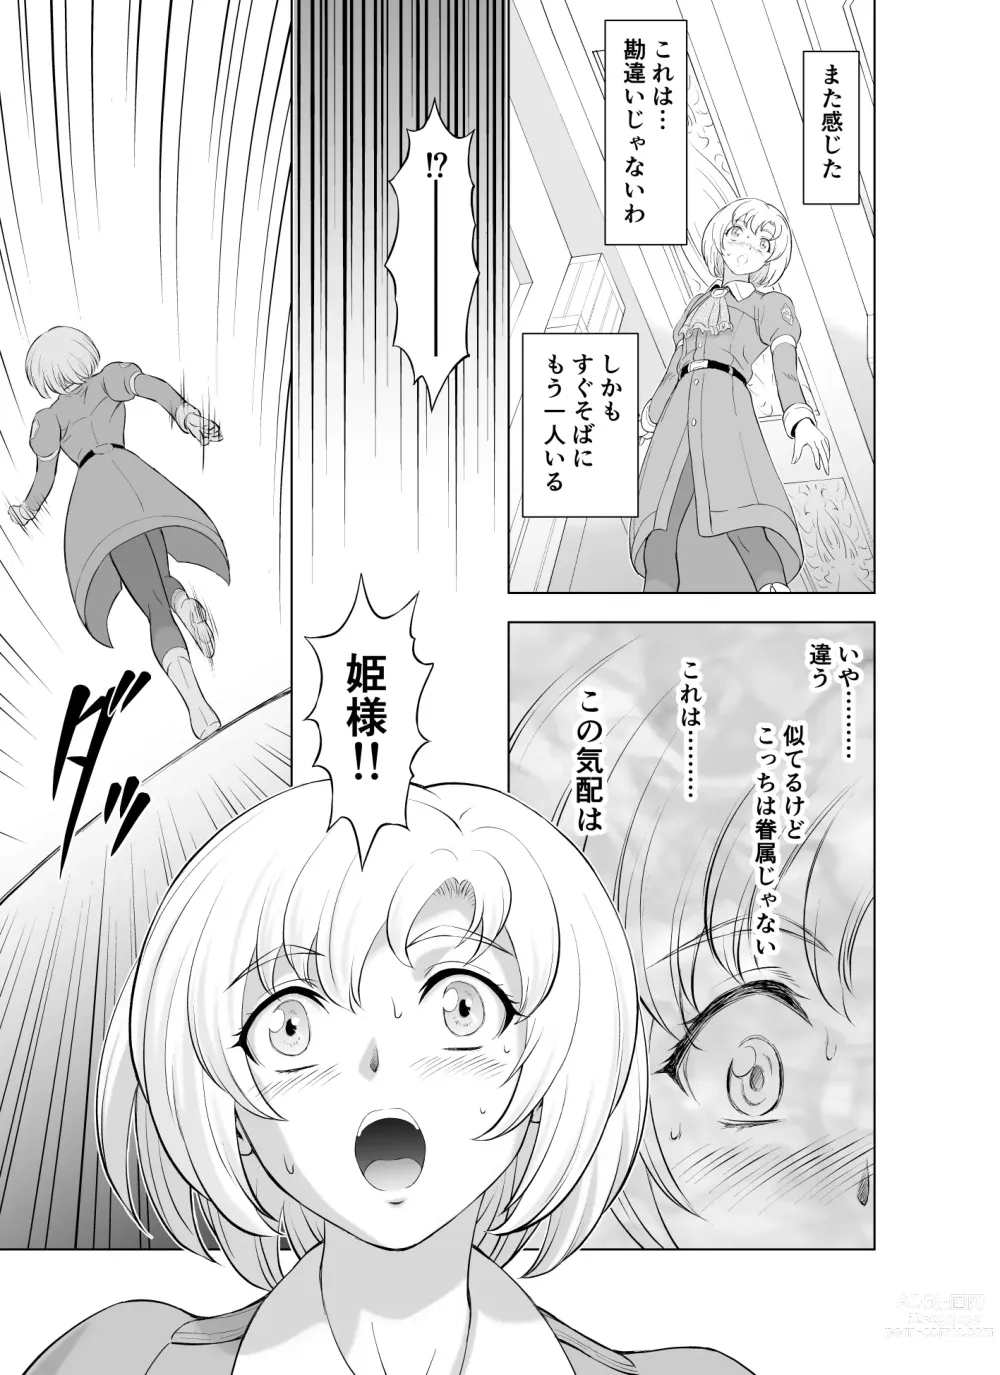 Page 7 of doujinshi Reties no Michibiki Vol. 9